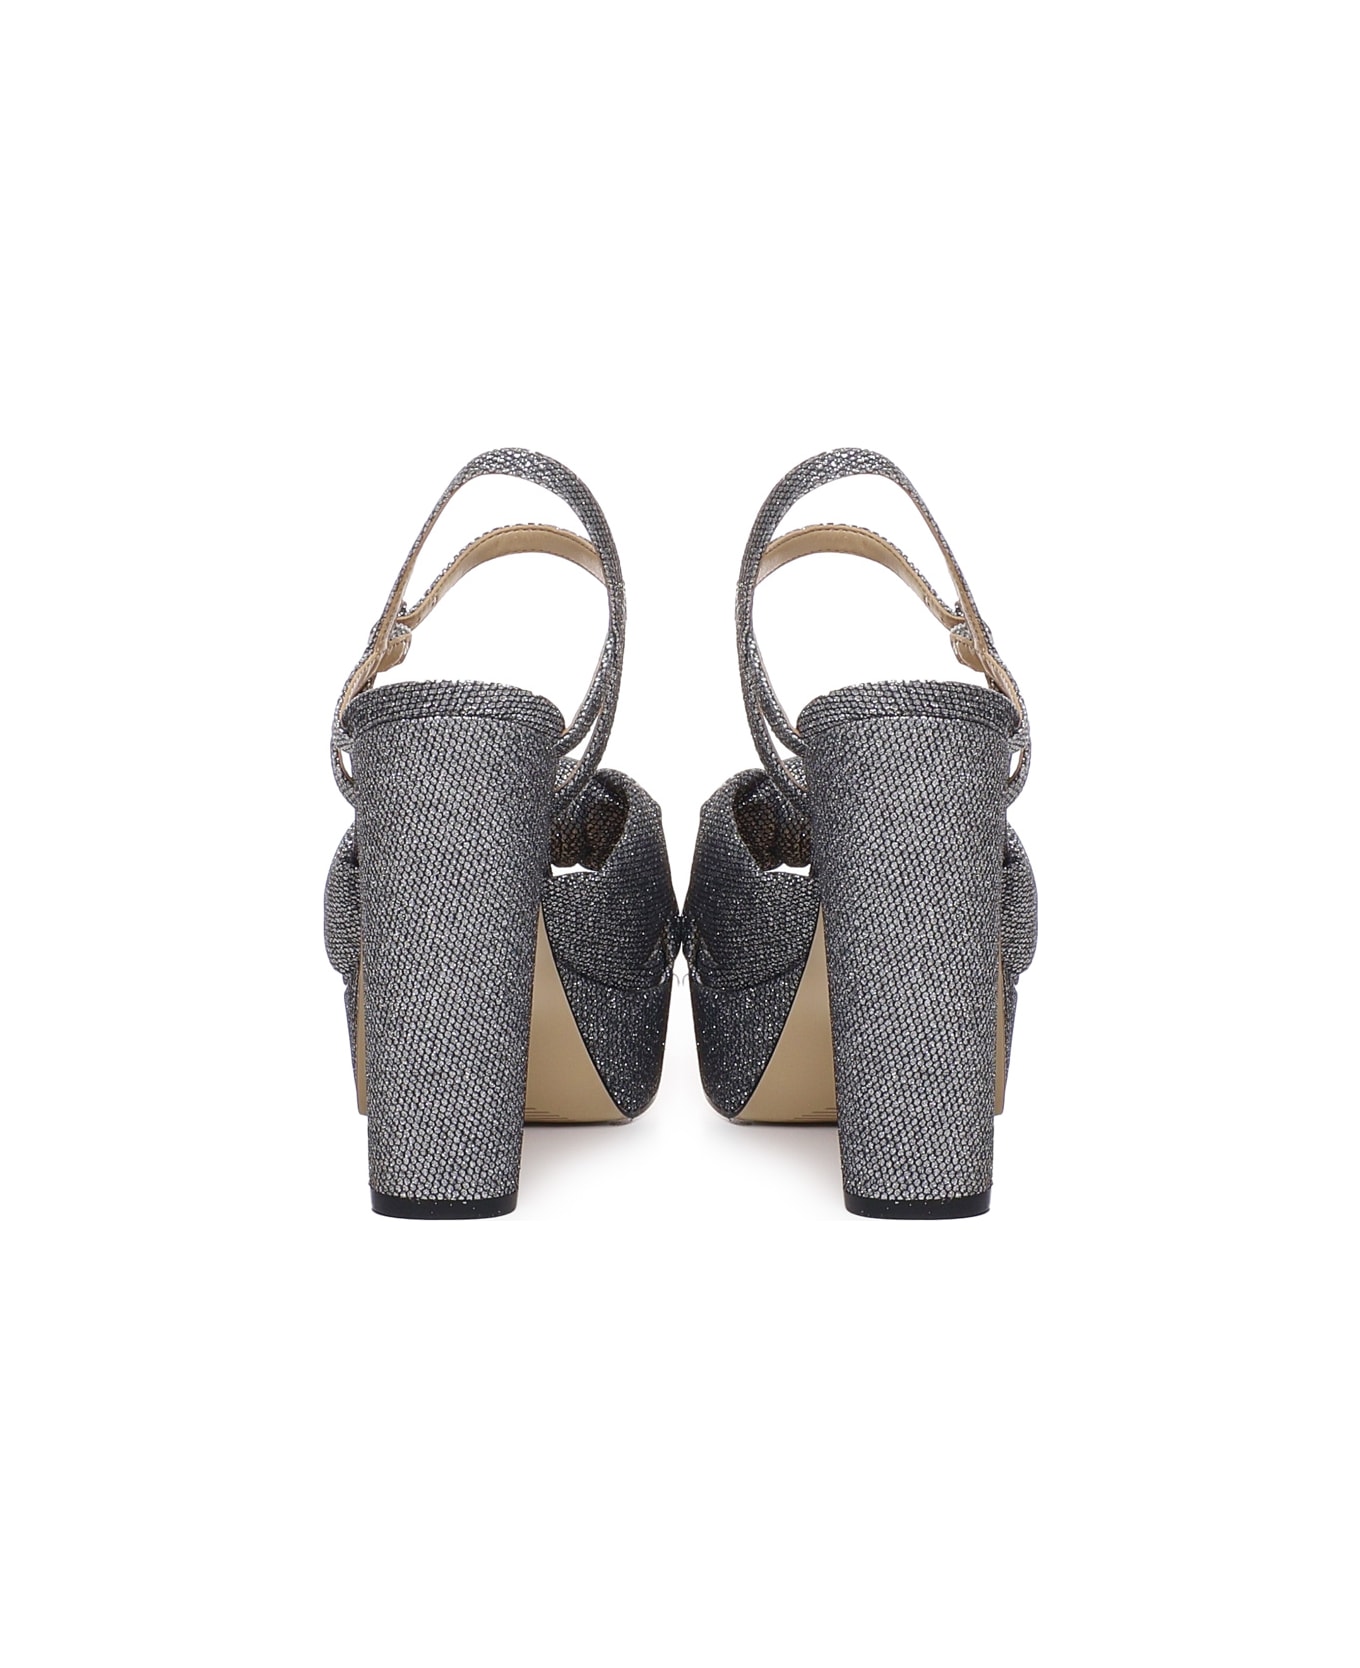 Michael Kors Josie Platform Sandals - Silver サンダル